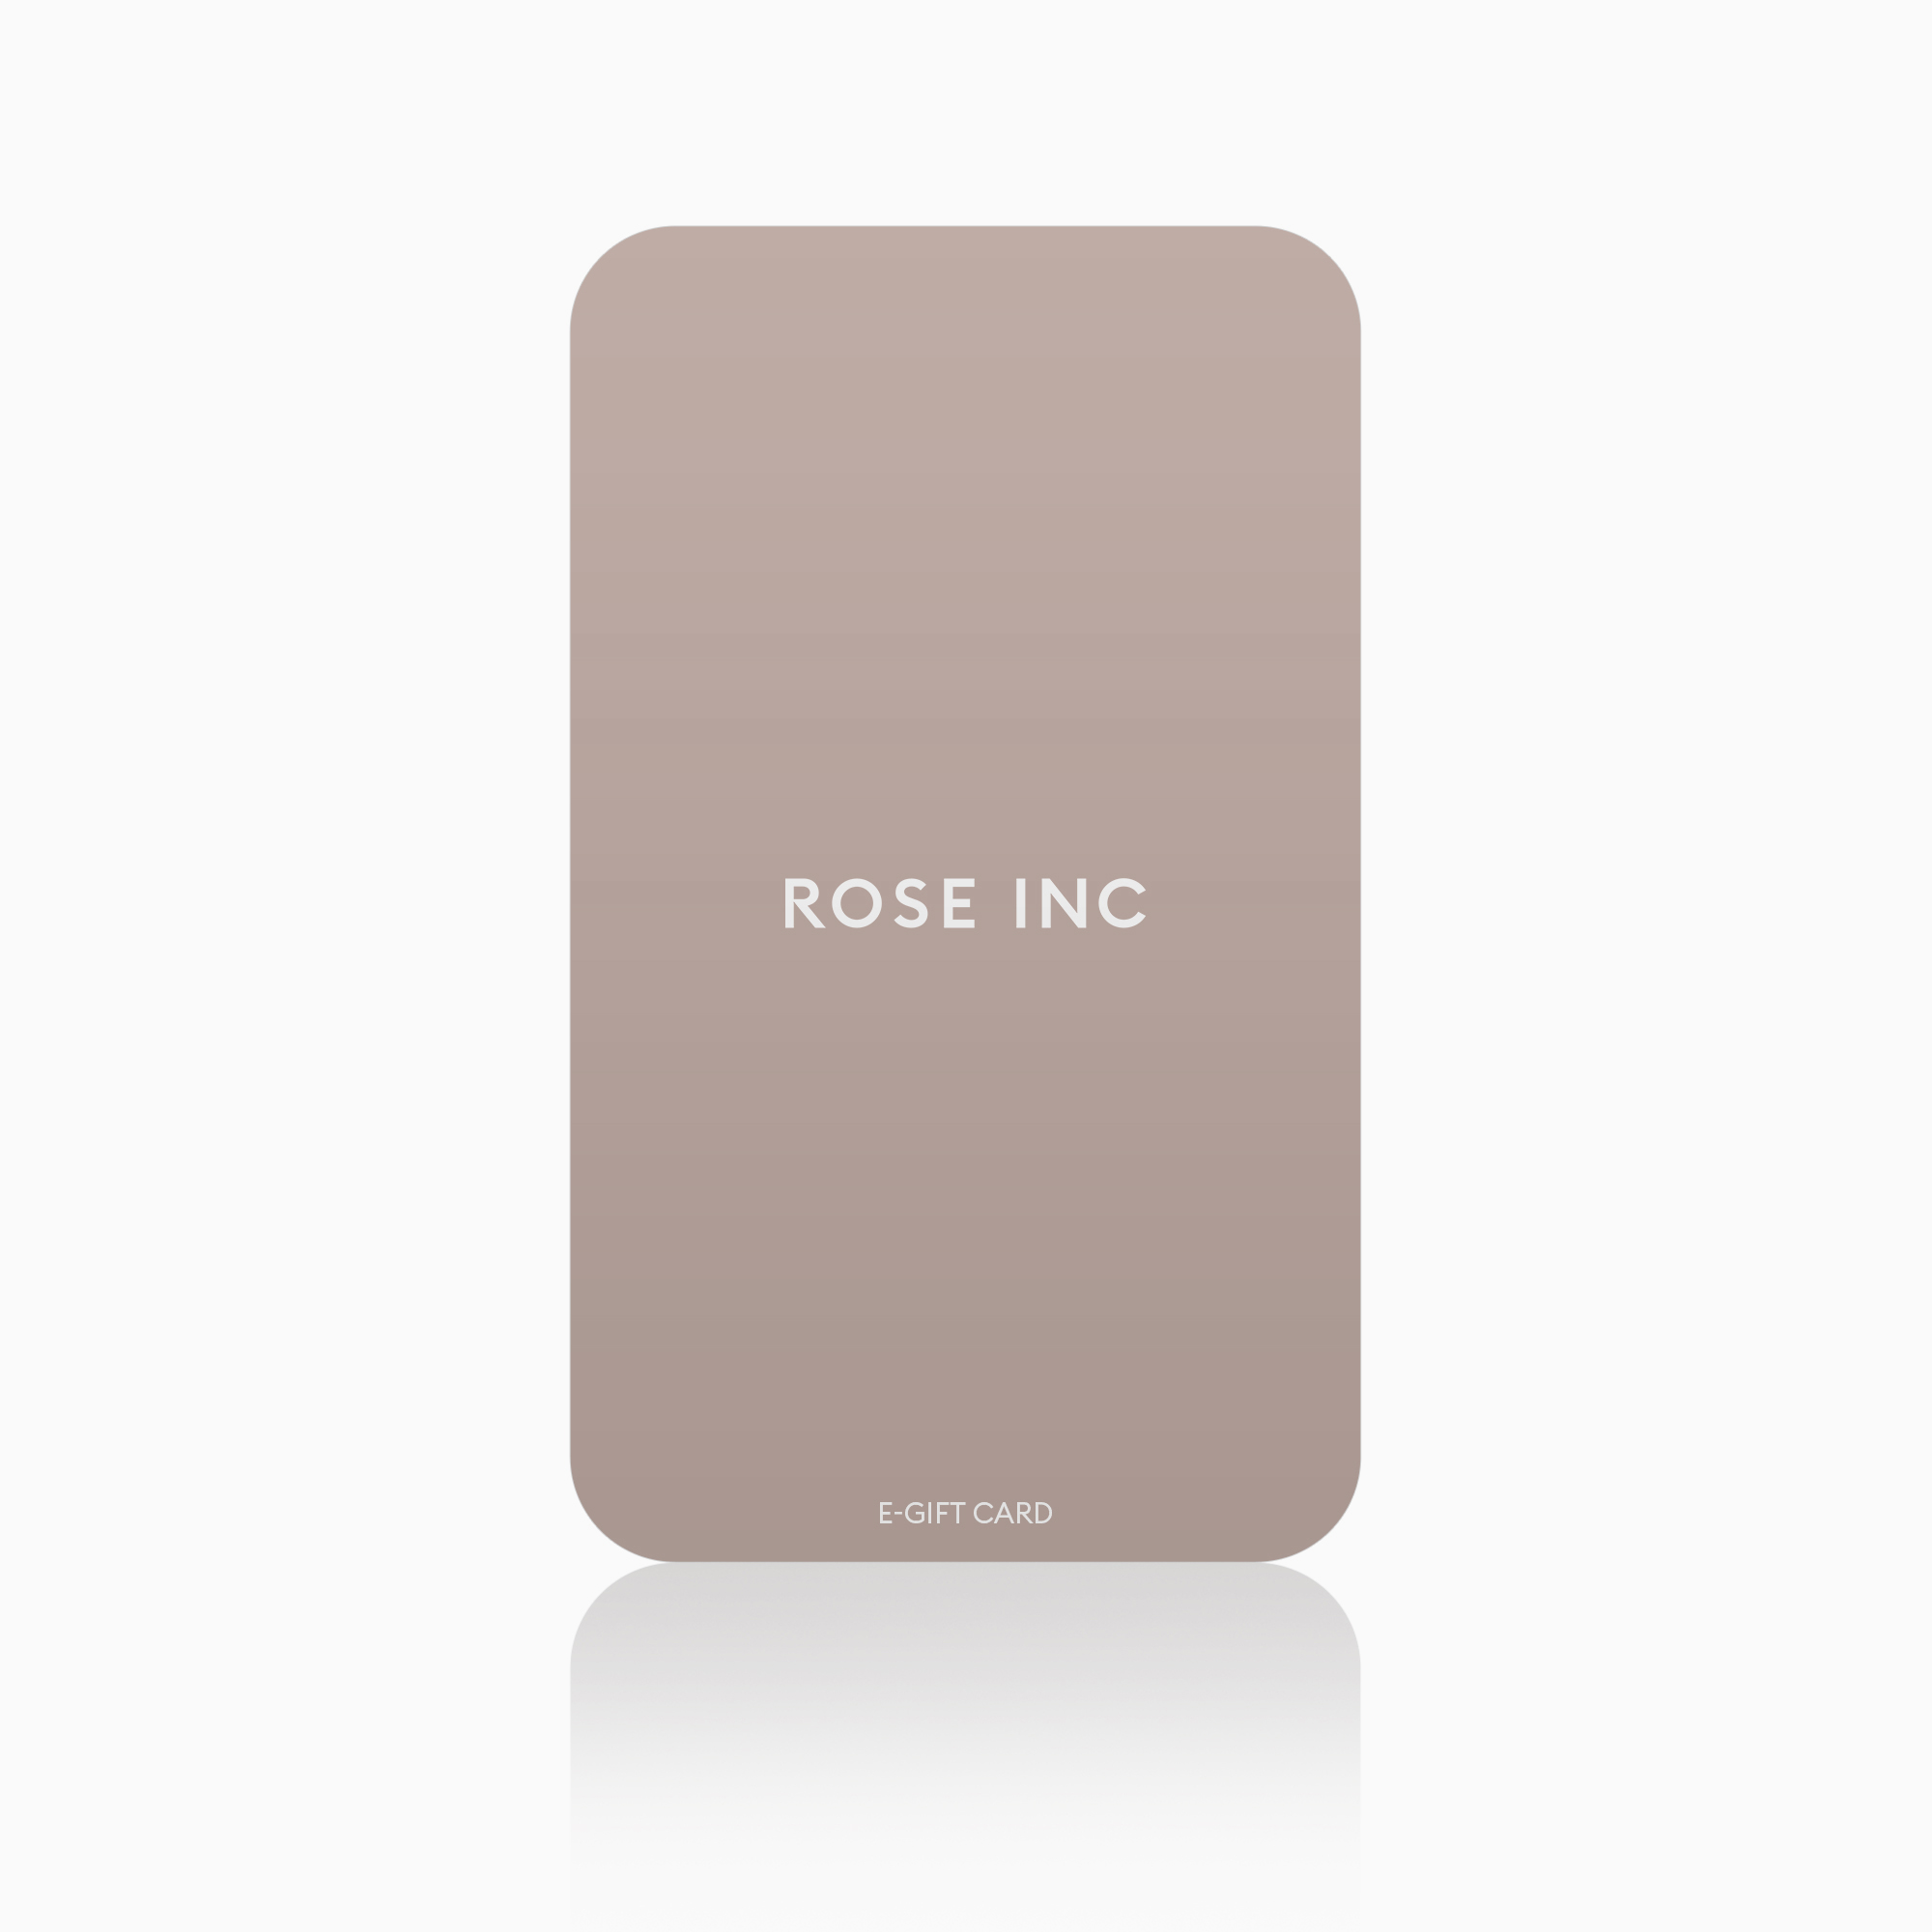 Rose inc digital gift card